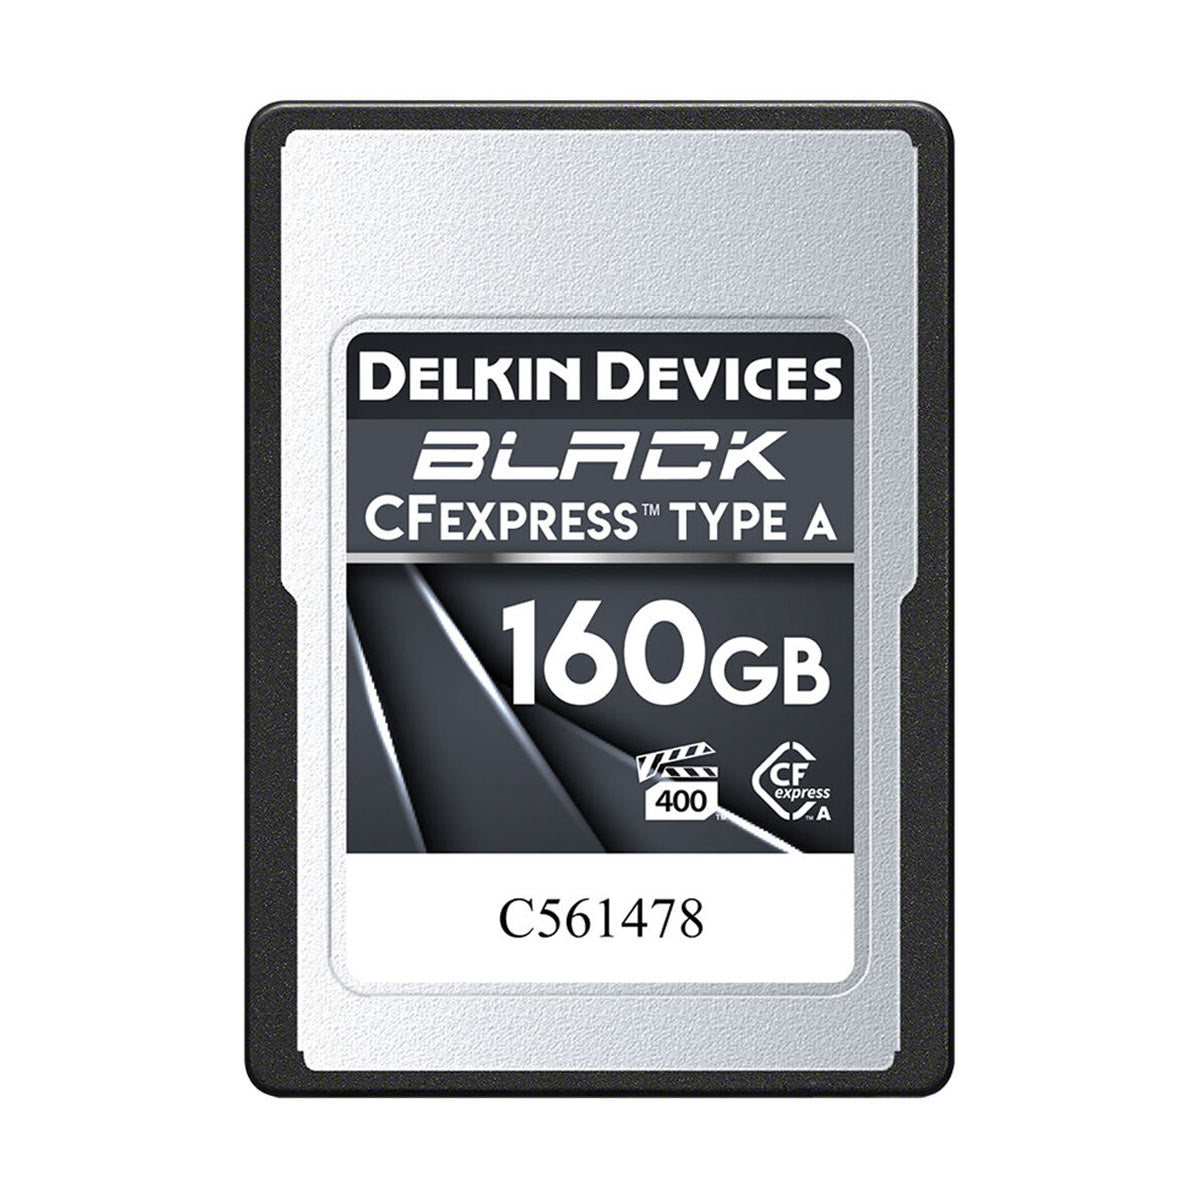 Delkin BLACK 160GB CFexpress Type A Memory Card (VPG 400)